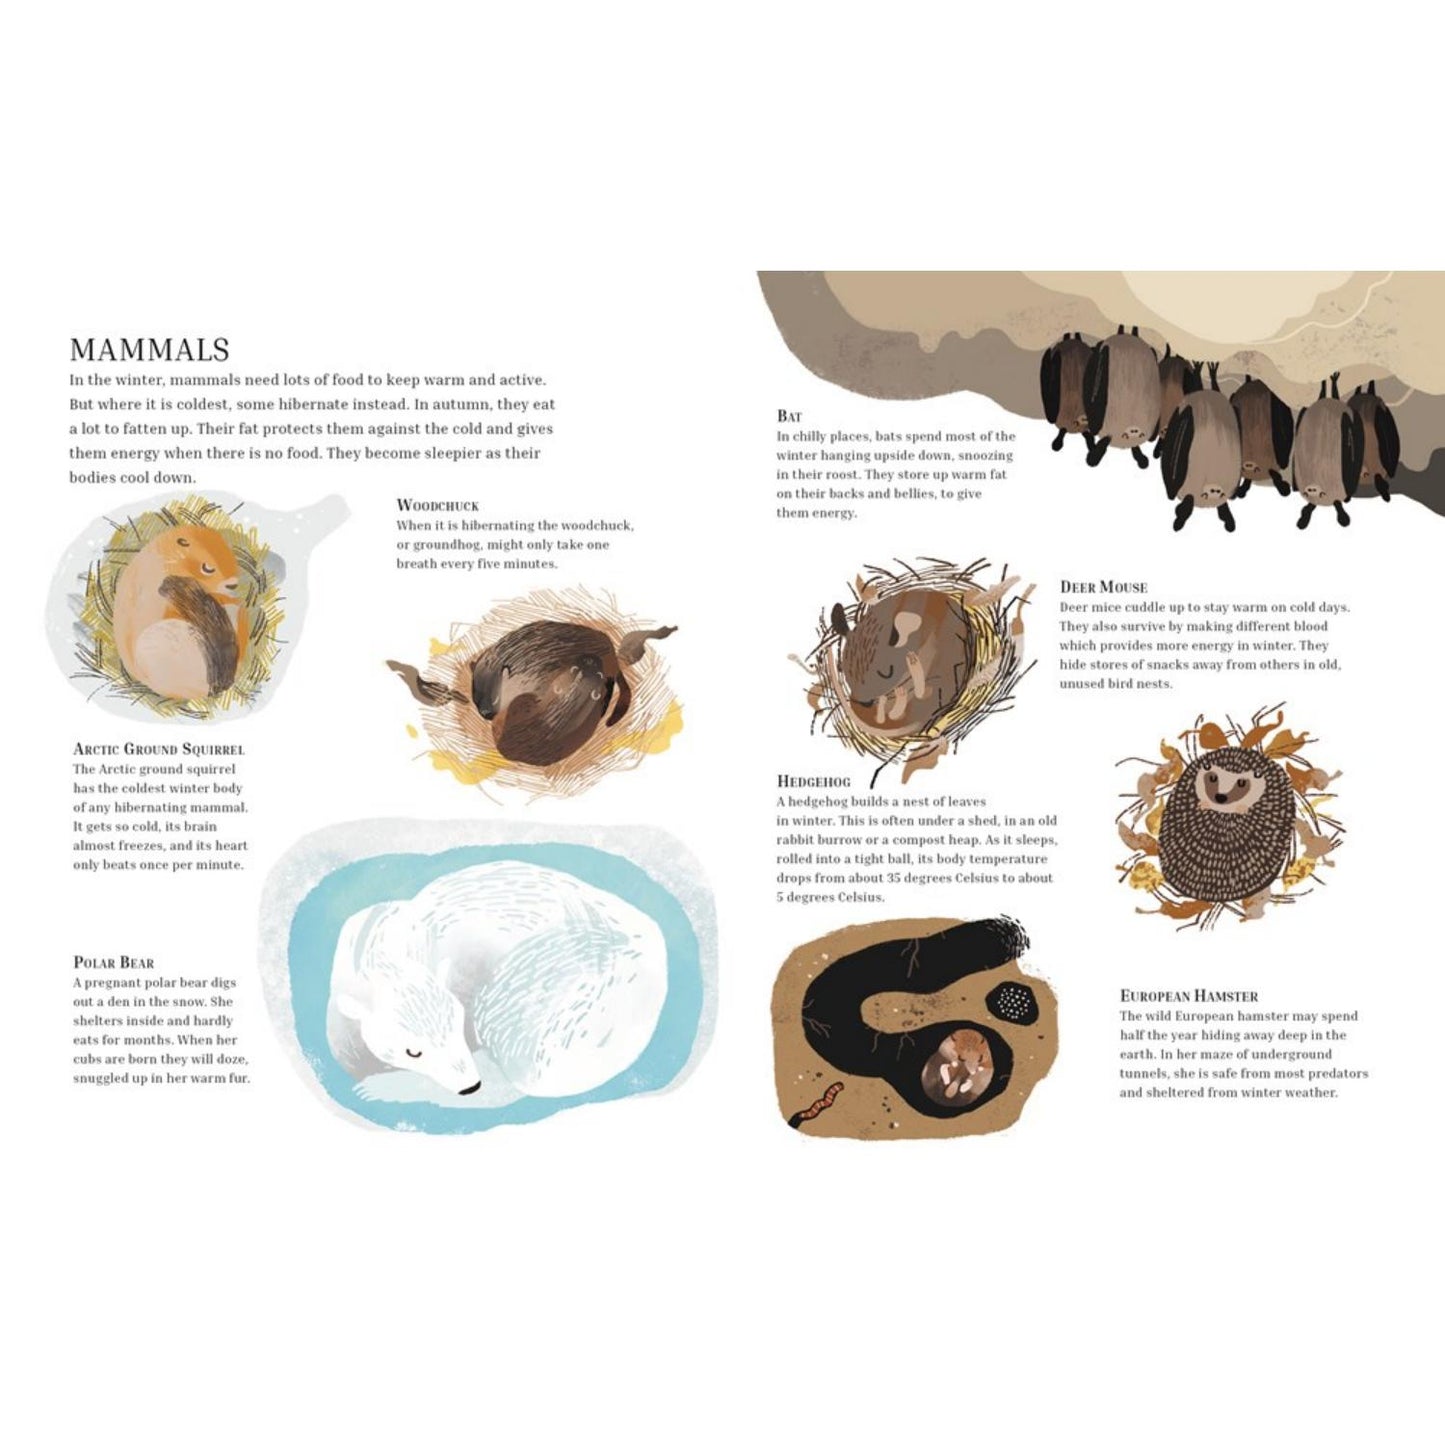 Winter Sleep: A Hibernation Story | Children’s Book on Nature